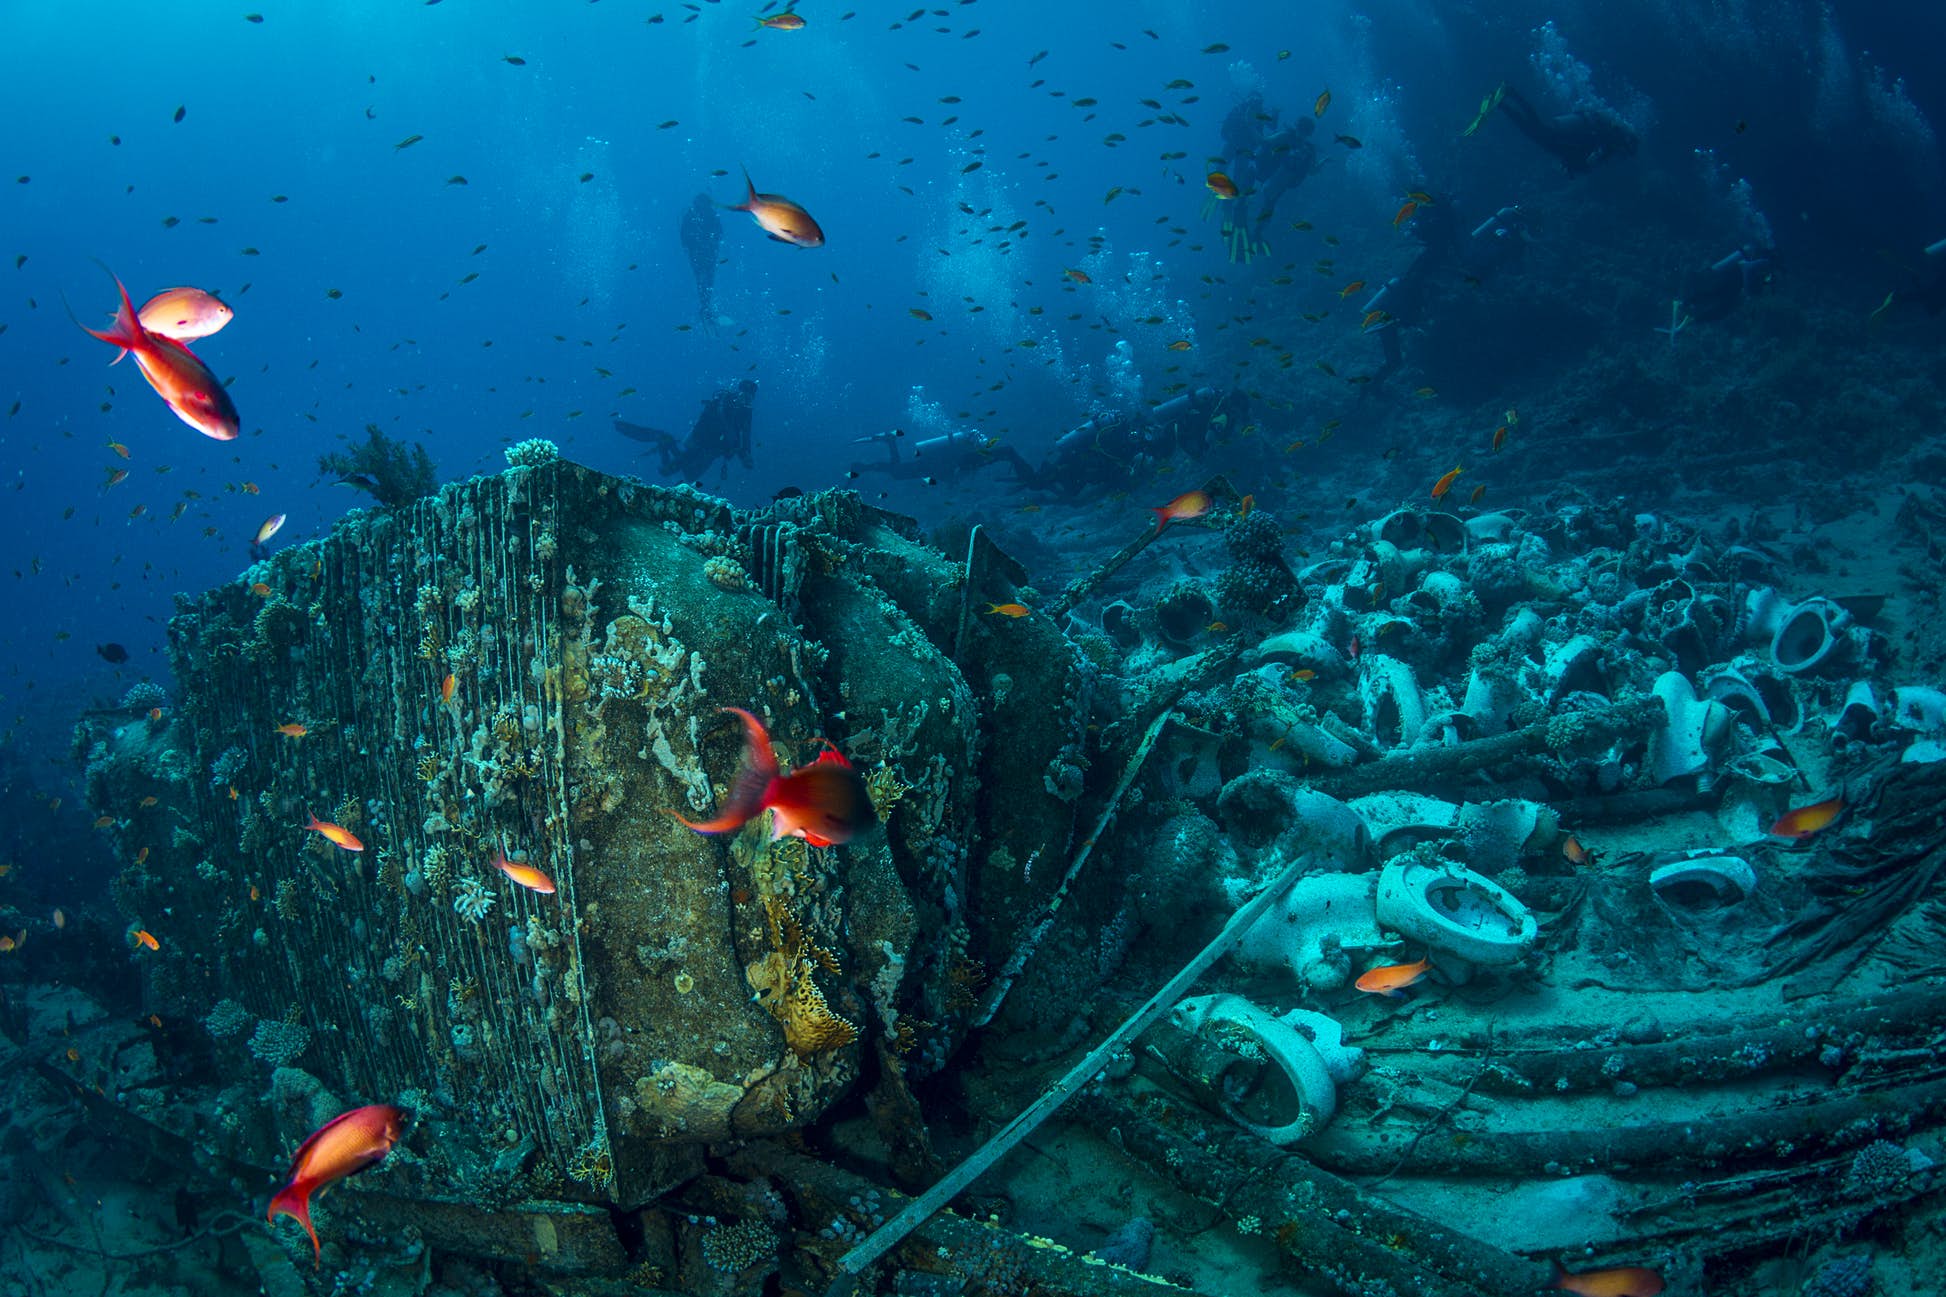 Group of scuba divers diving Yolanda wreck off Sharm El Sheikh in Egypt © UnderTheSea / Shutterstock